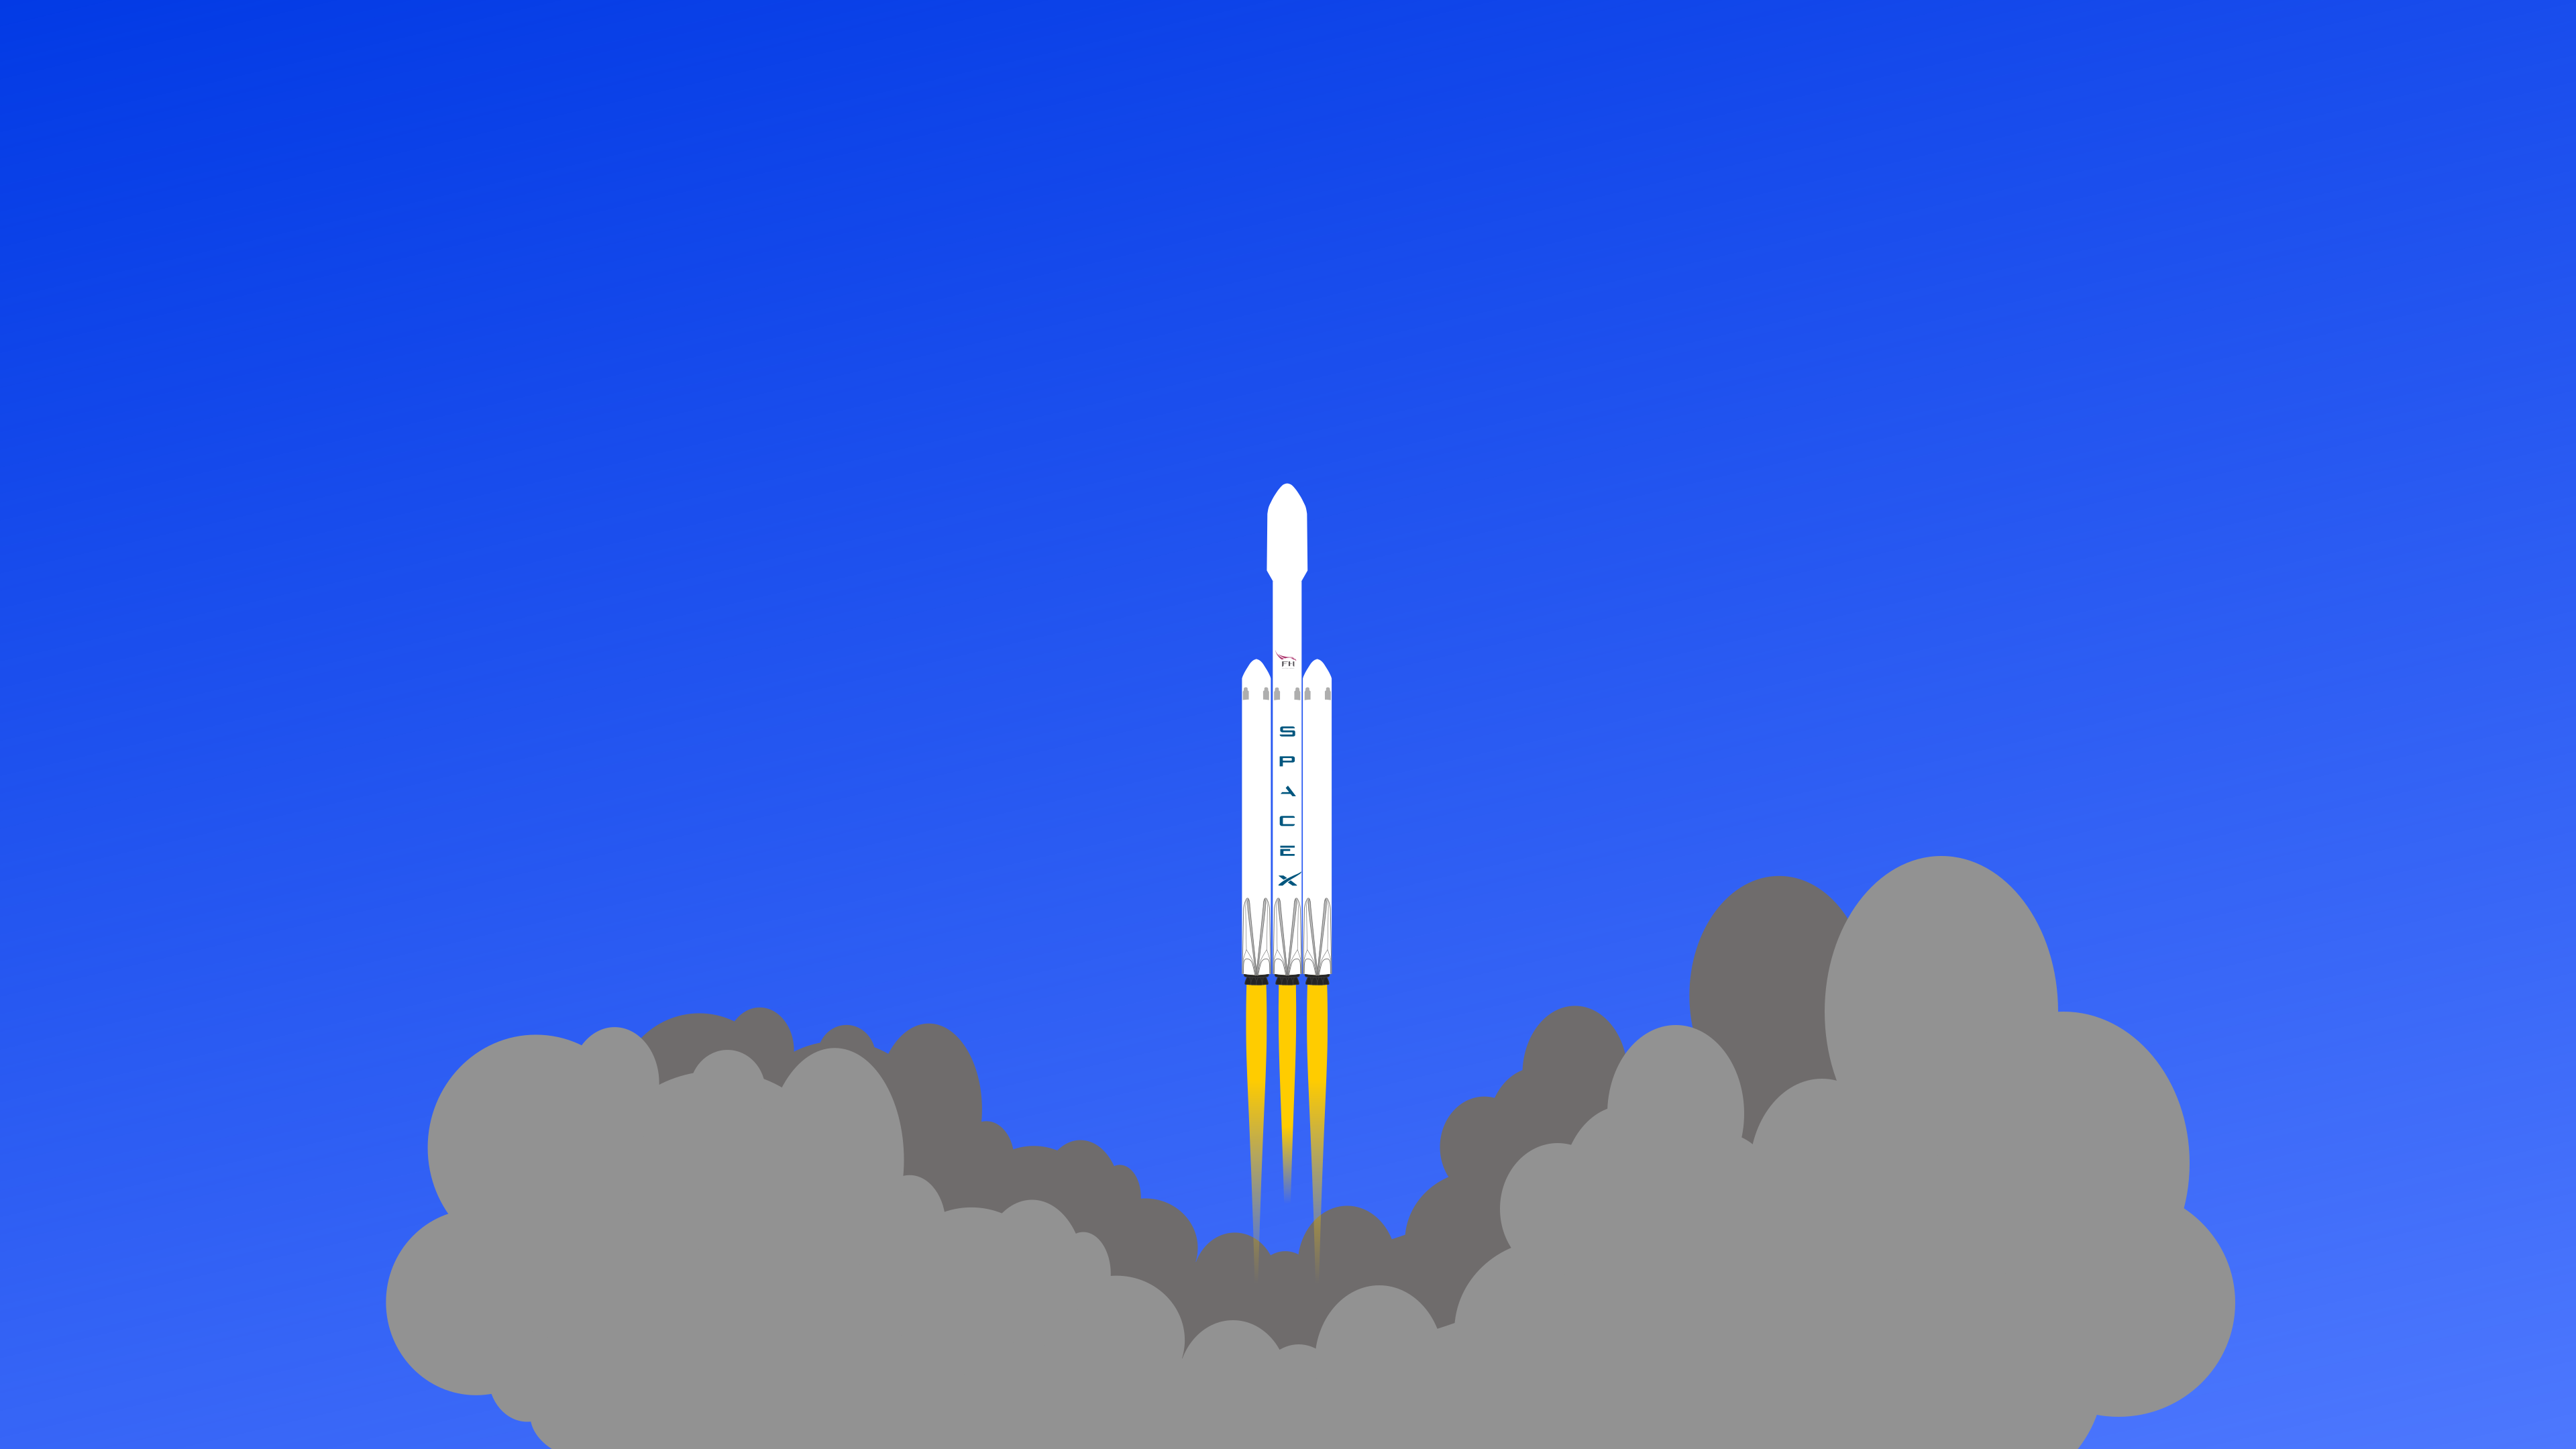 Made a minimalist(ish) Falcon Heavy desktop background. Hope you